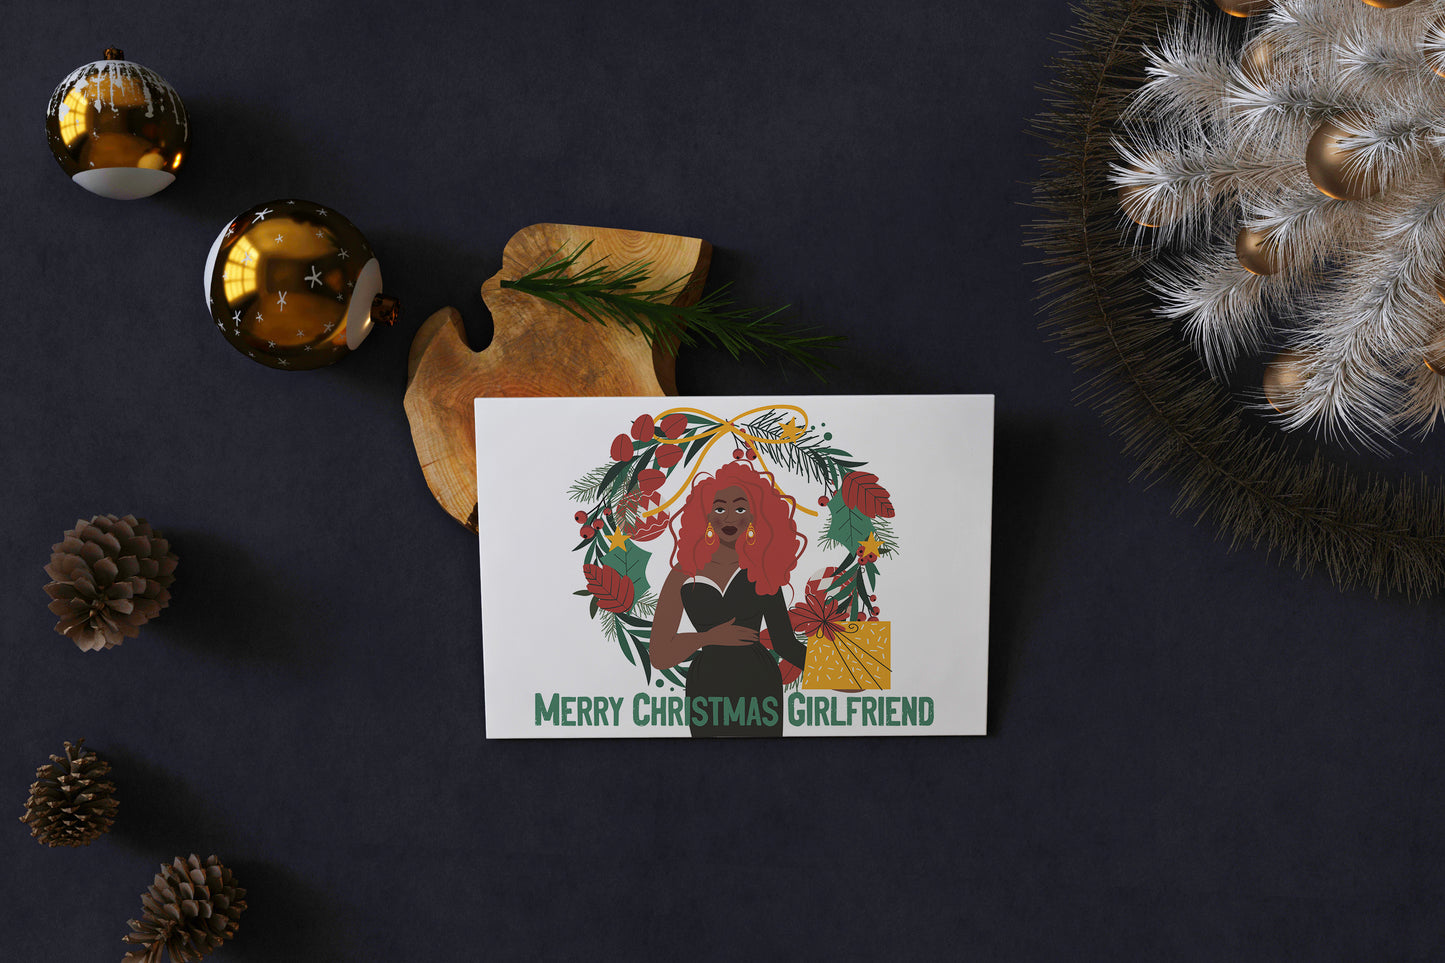 "Merry Christmas Girlfriend" Card